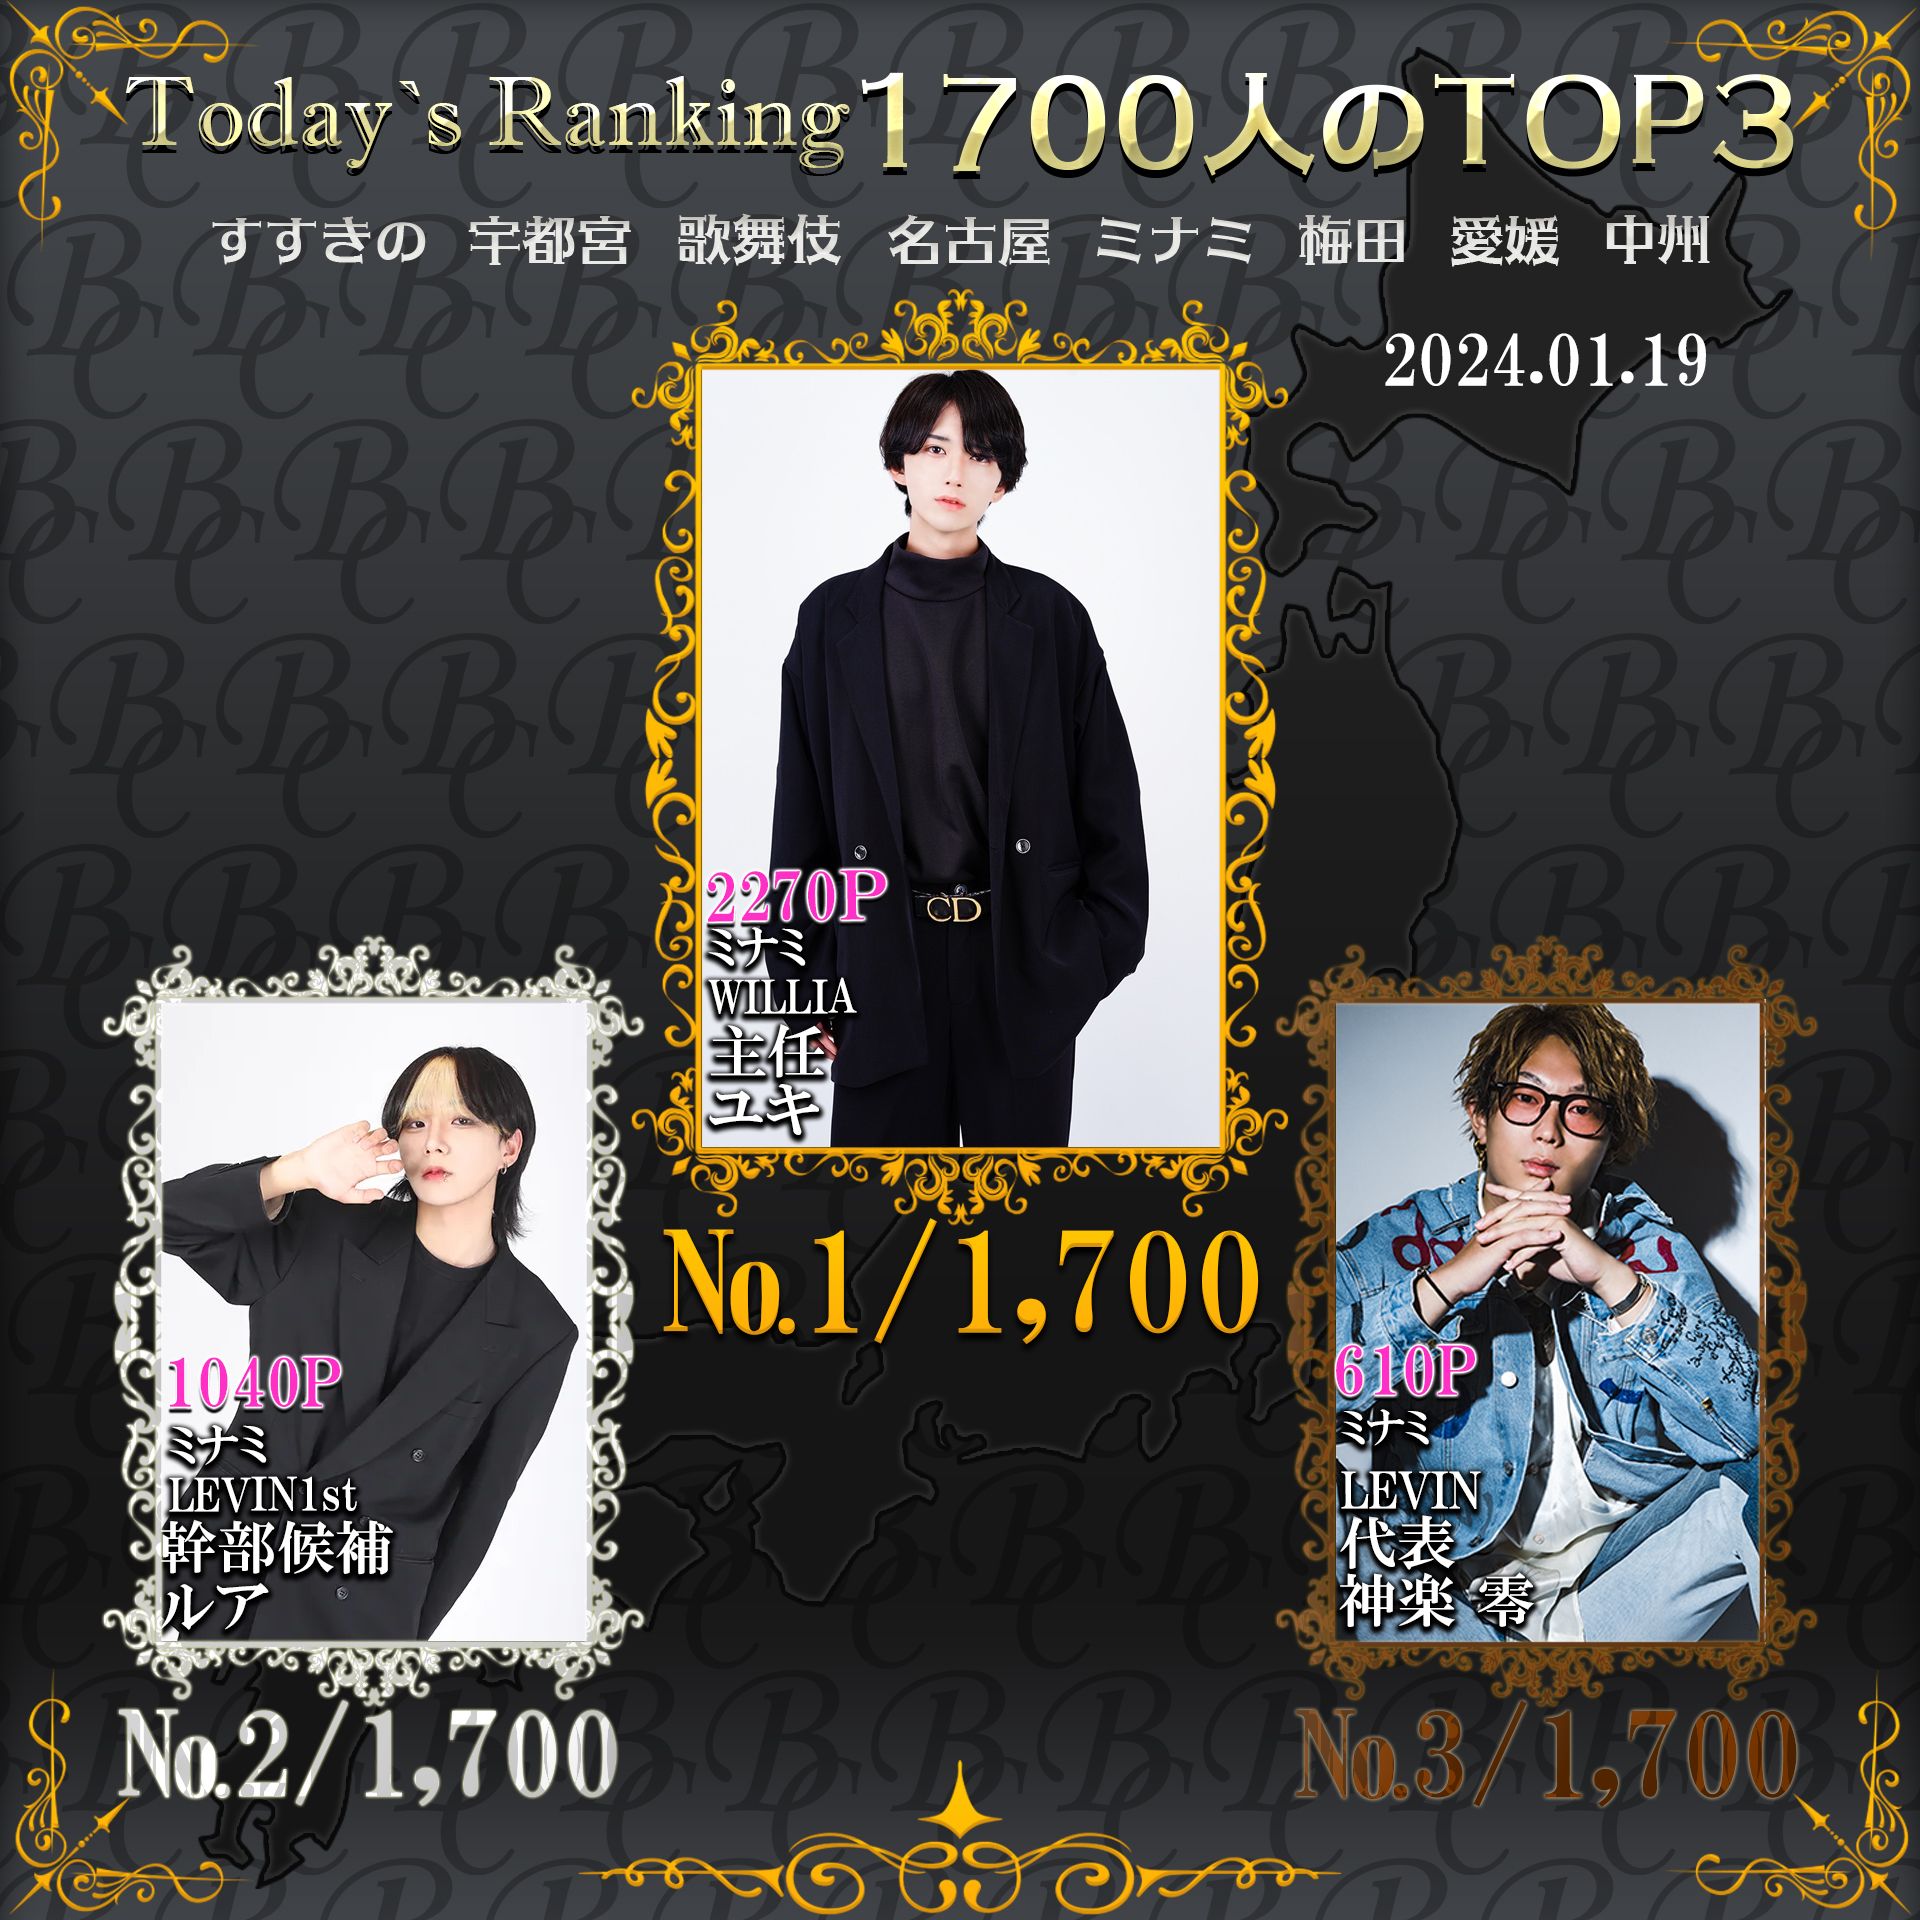 1/19  Today’s Ranking